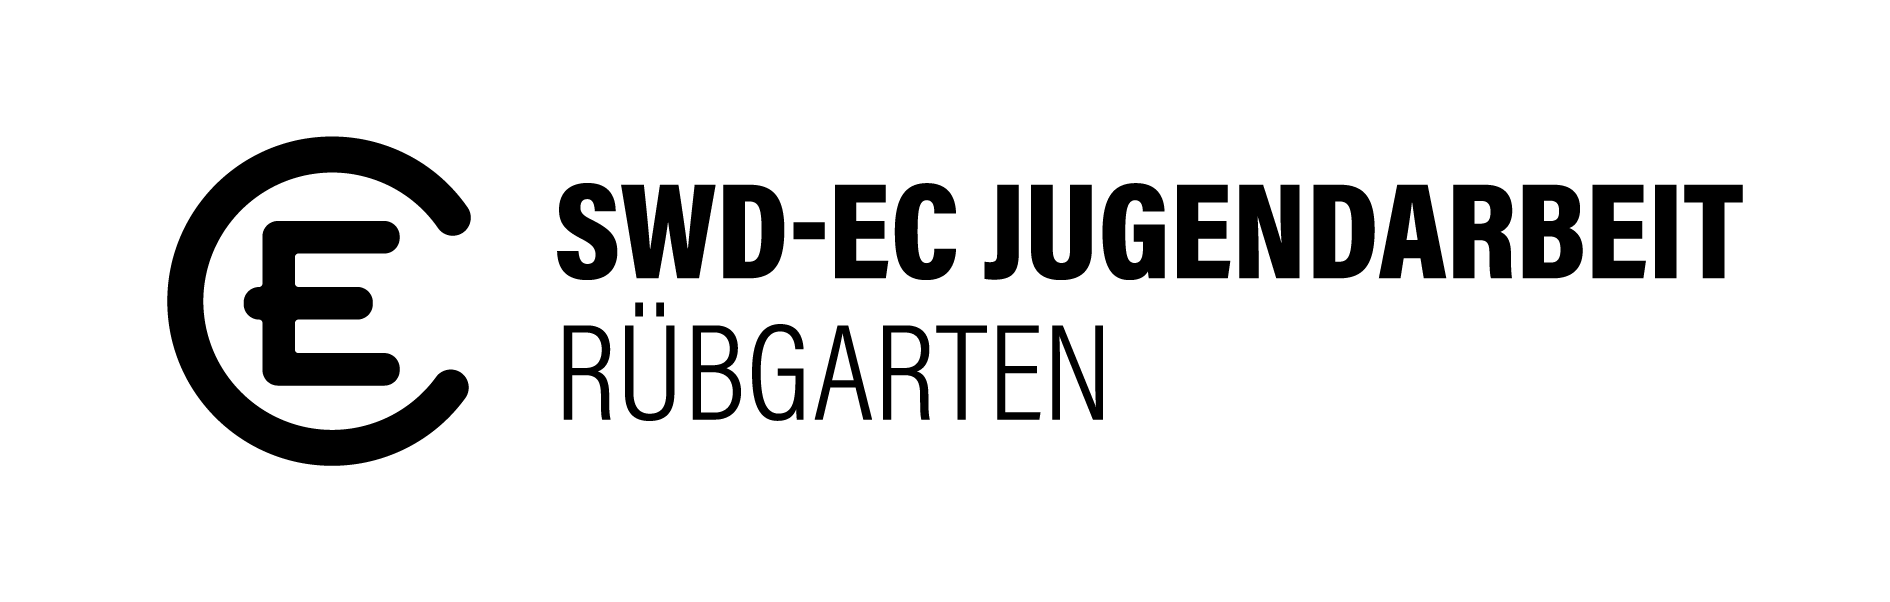 EC Rübgarten